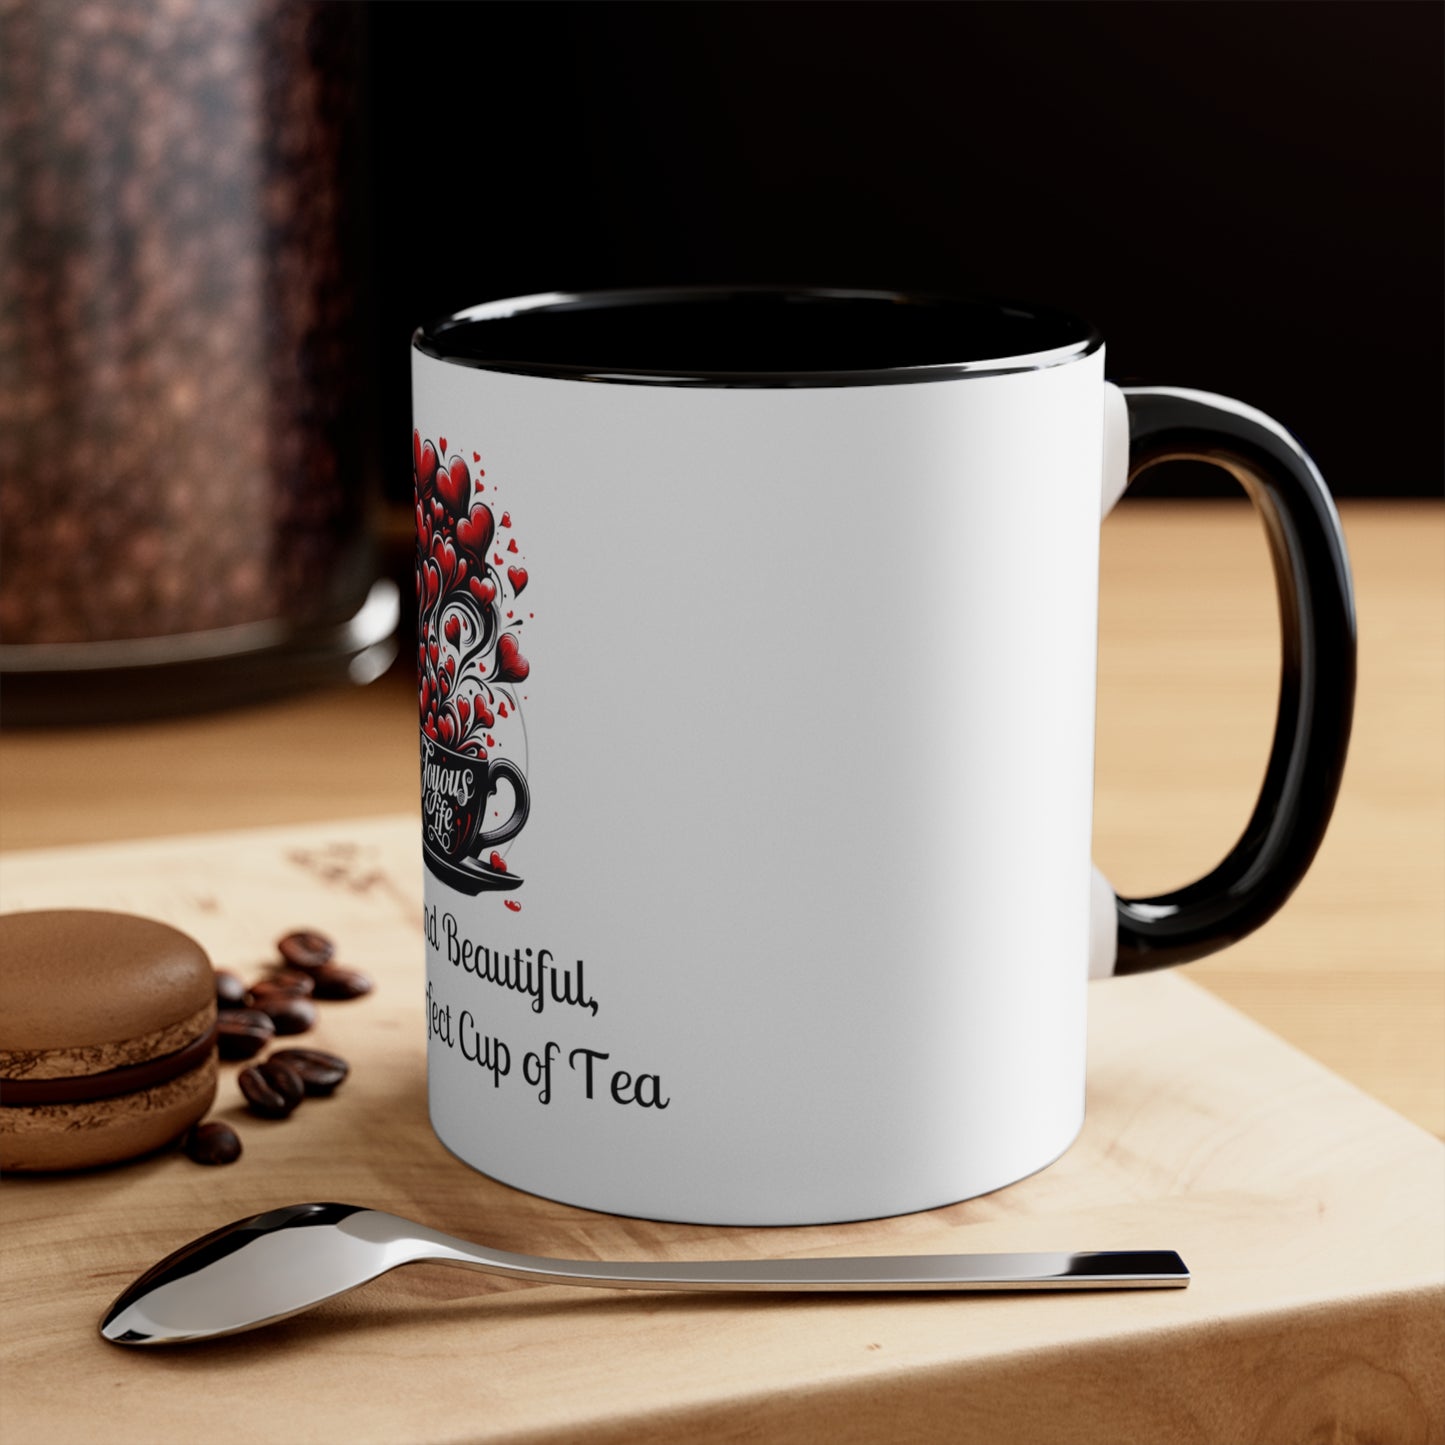 Bold & Beautiful Mug: Perfect Cup of Tea